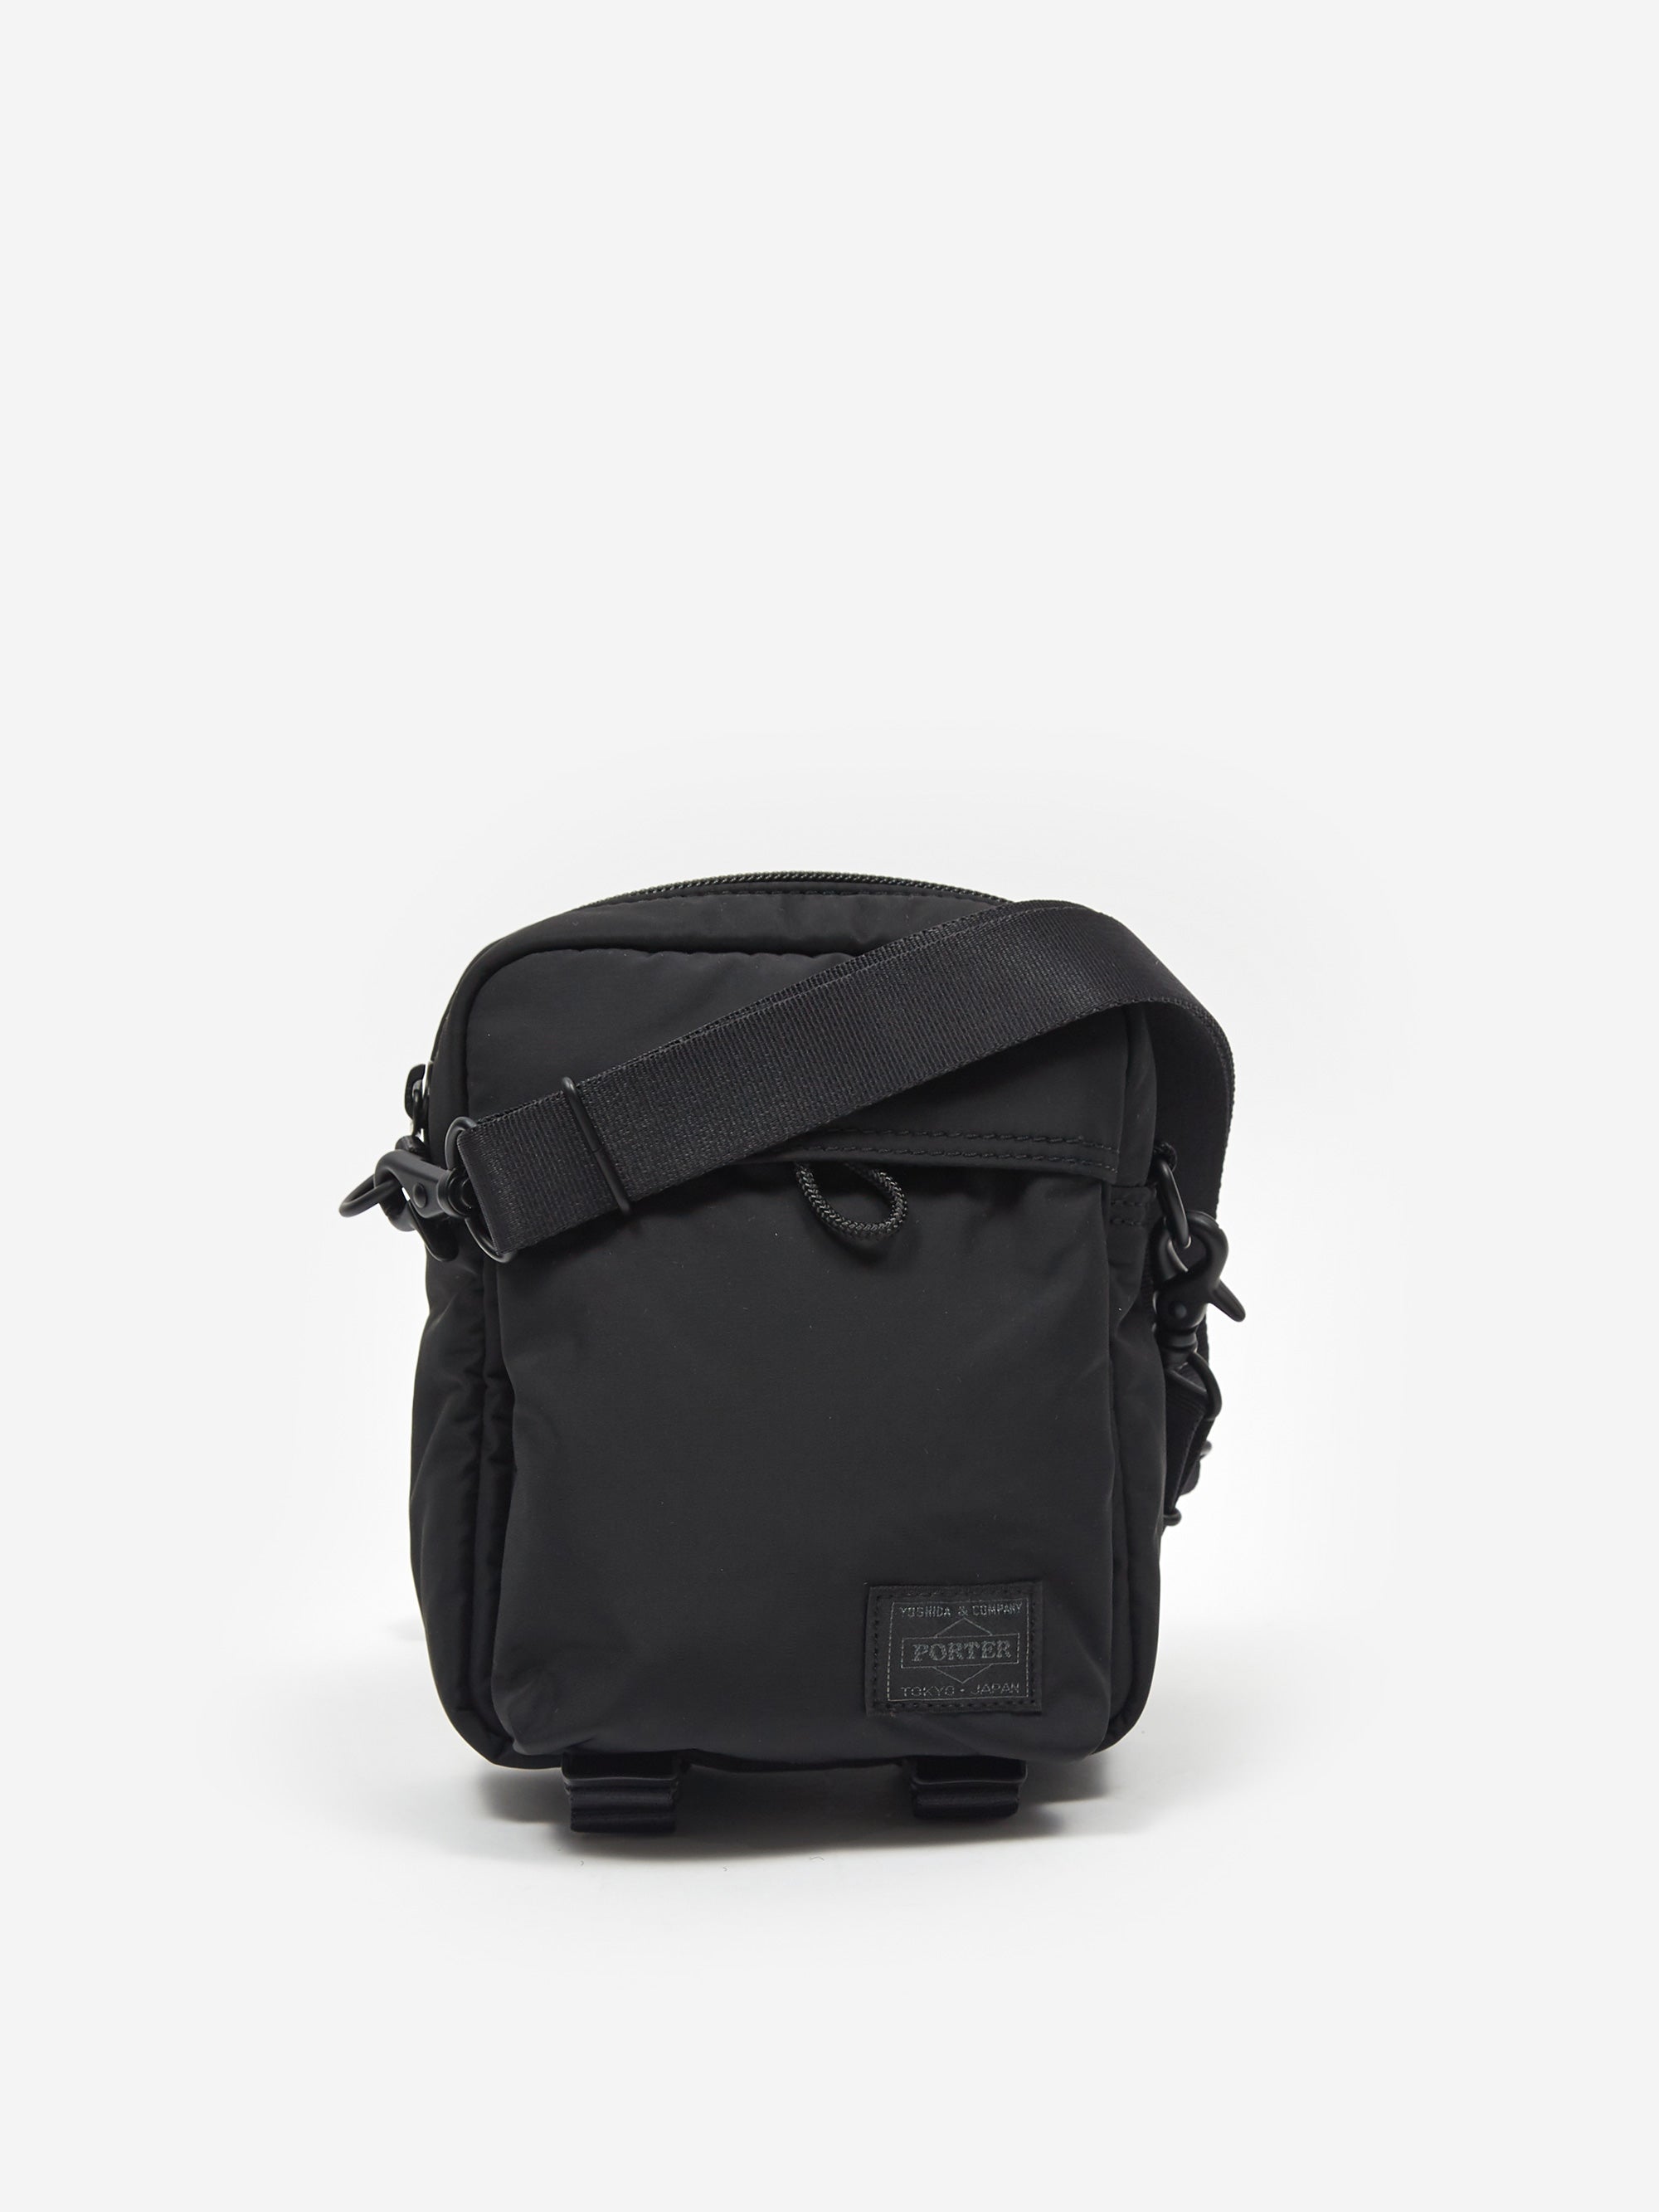 Porter - Yoshida u0026 Co. Senses Vertical Shoulder Bag - Black